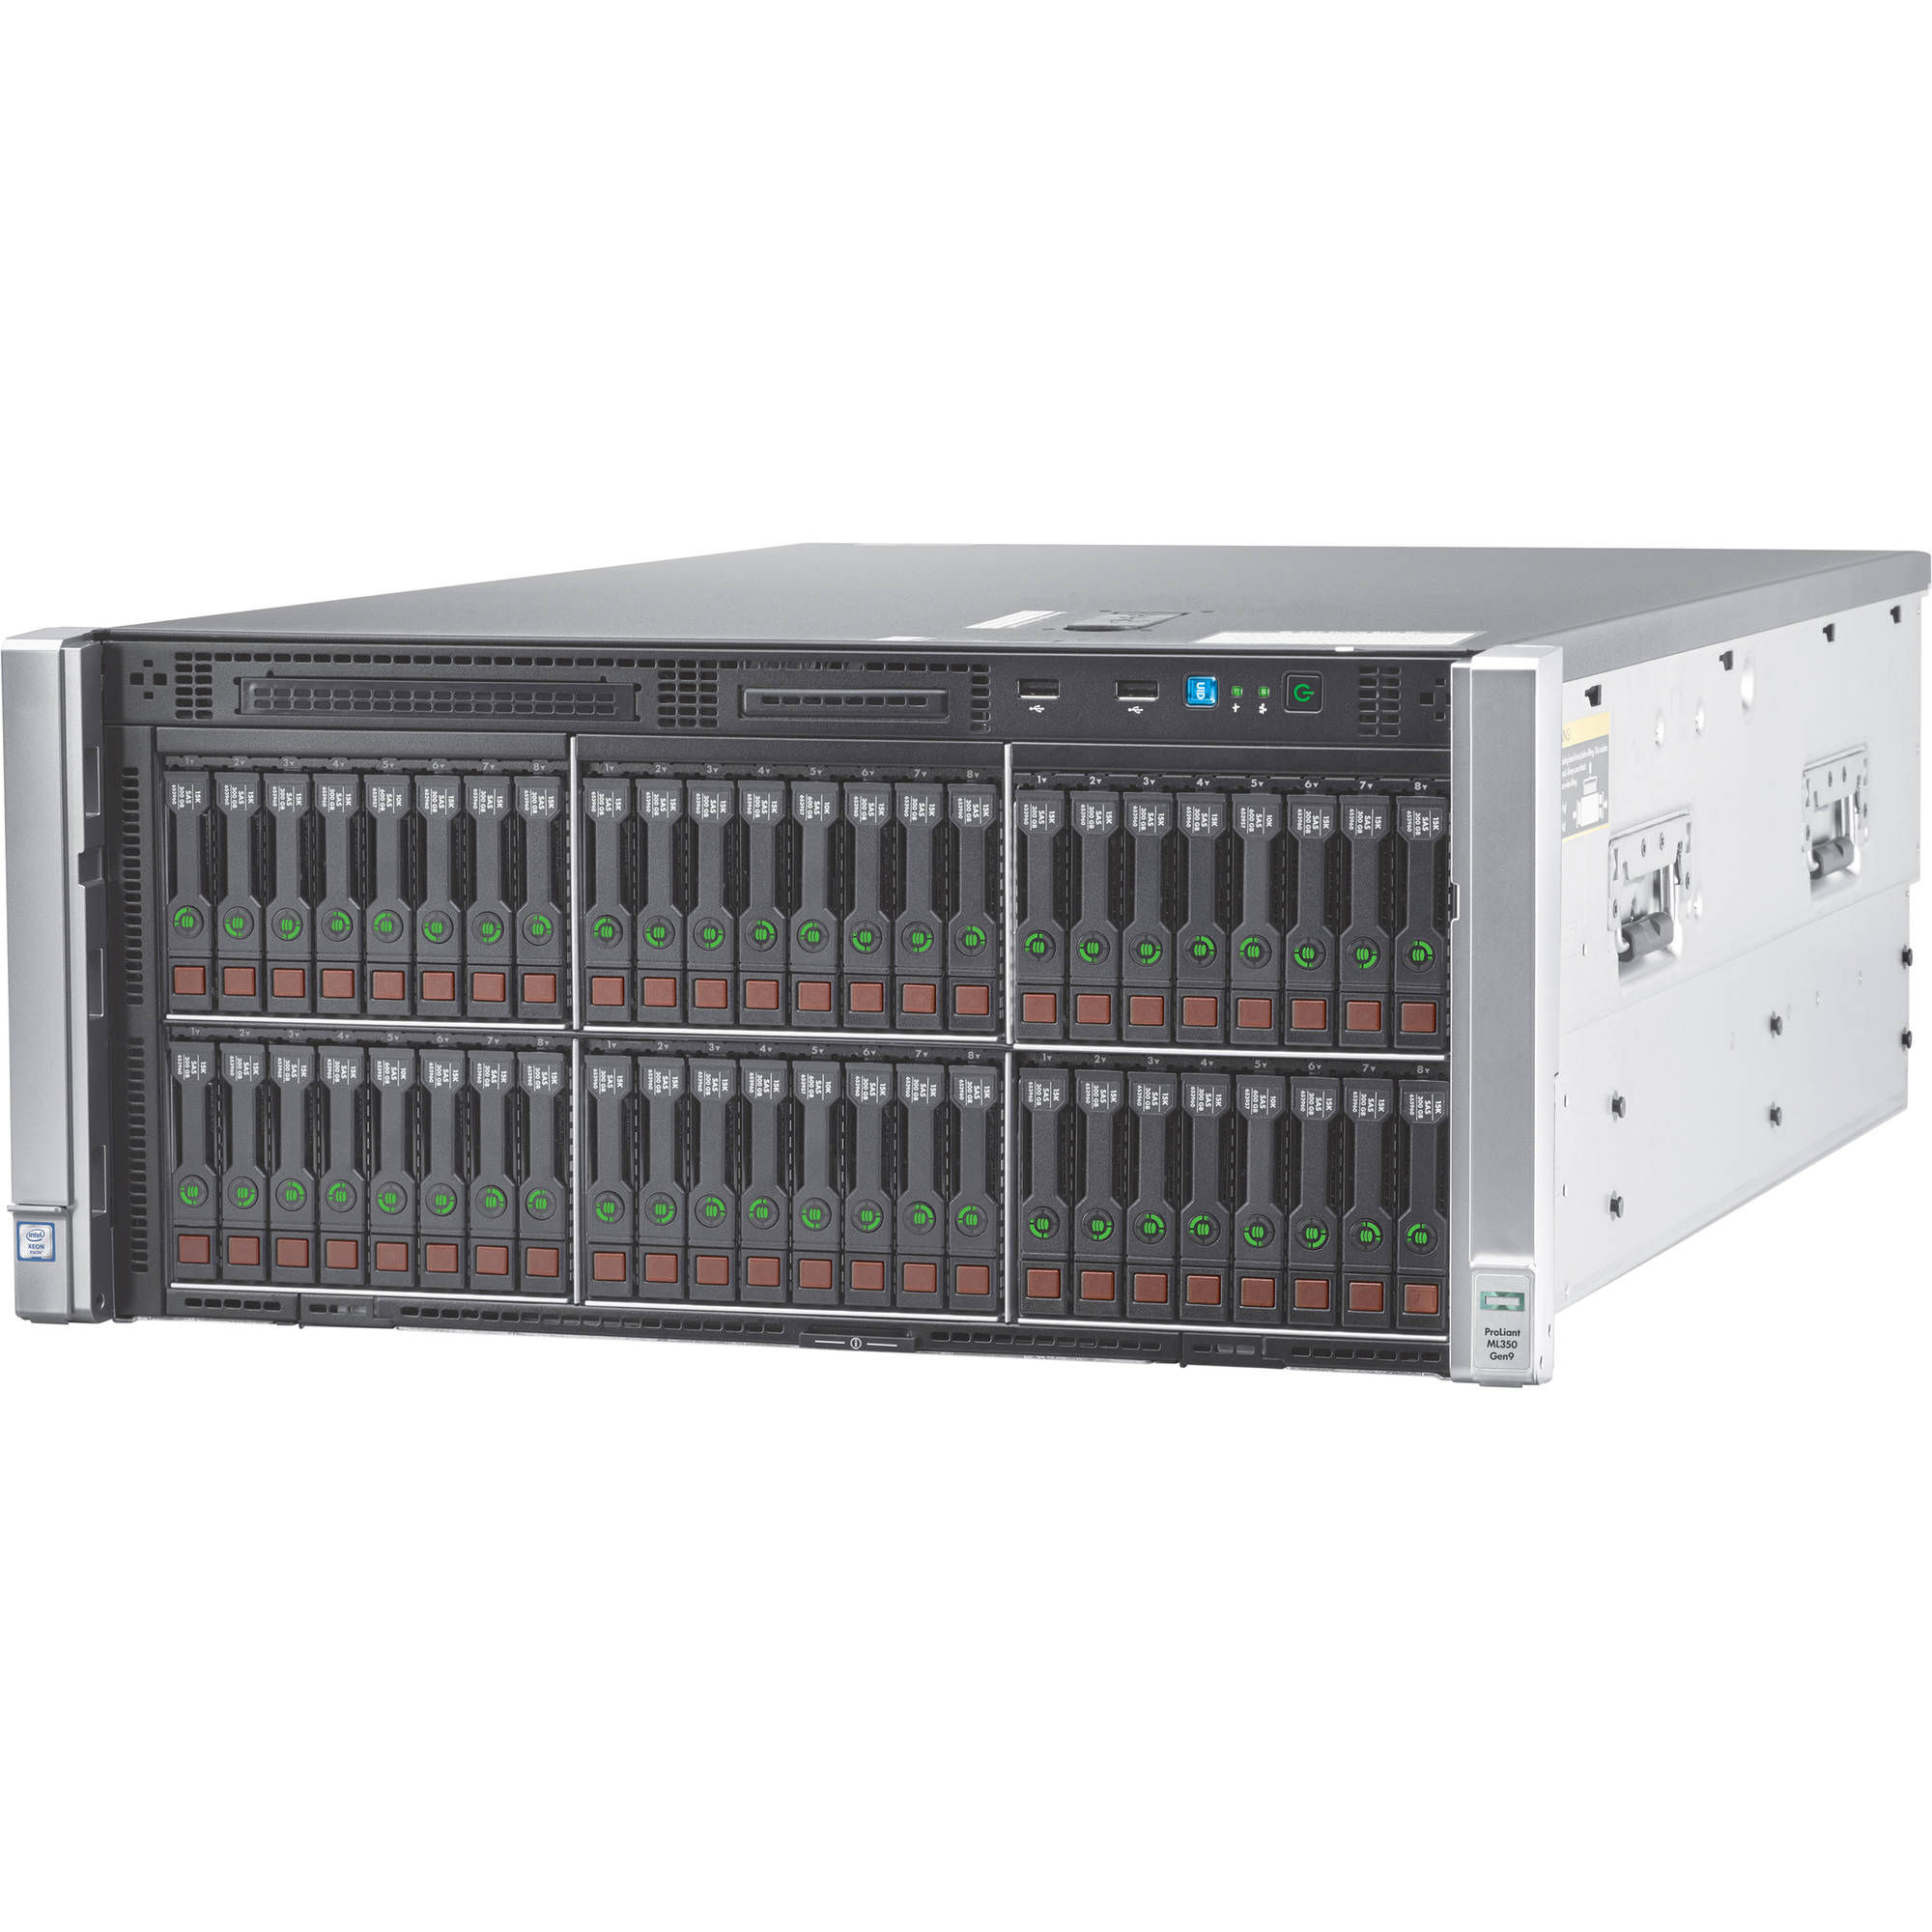 HP ProLiant ML350 Gen9 Server (5 RU) 835263-001 B&H Photo Video